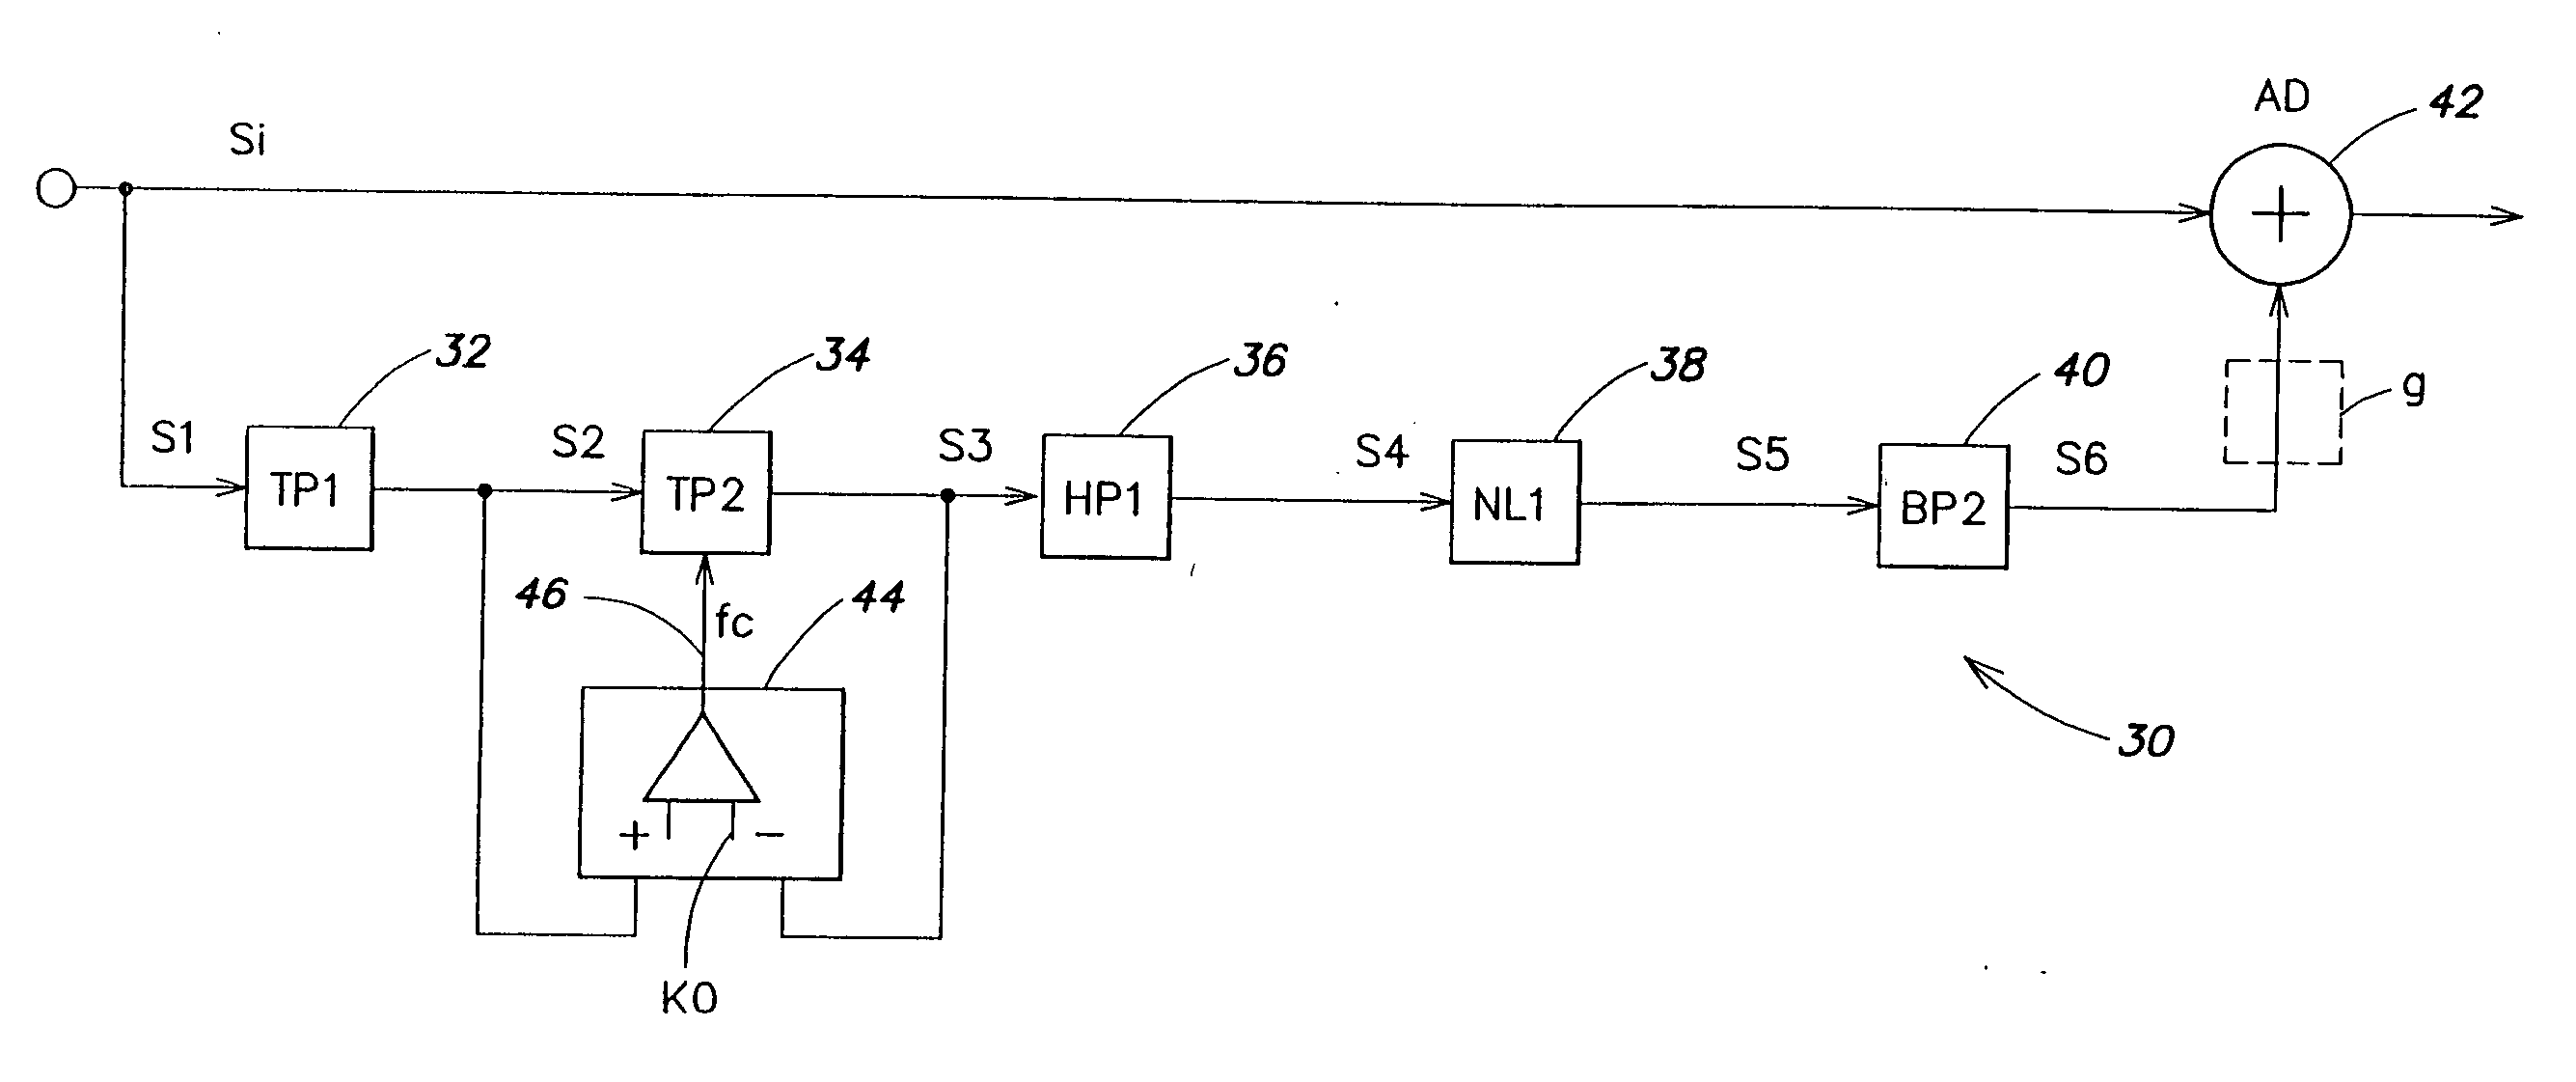 Apparatus for generating harmonics in an audio signal